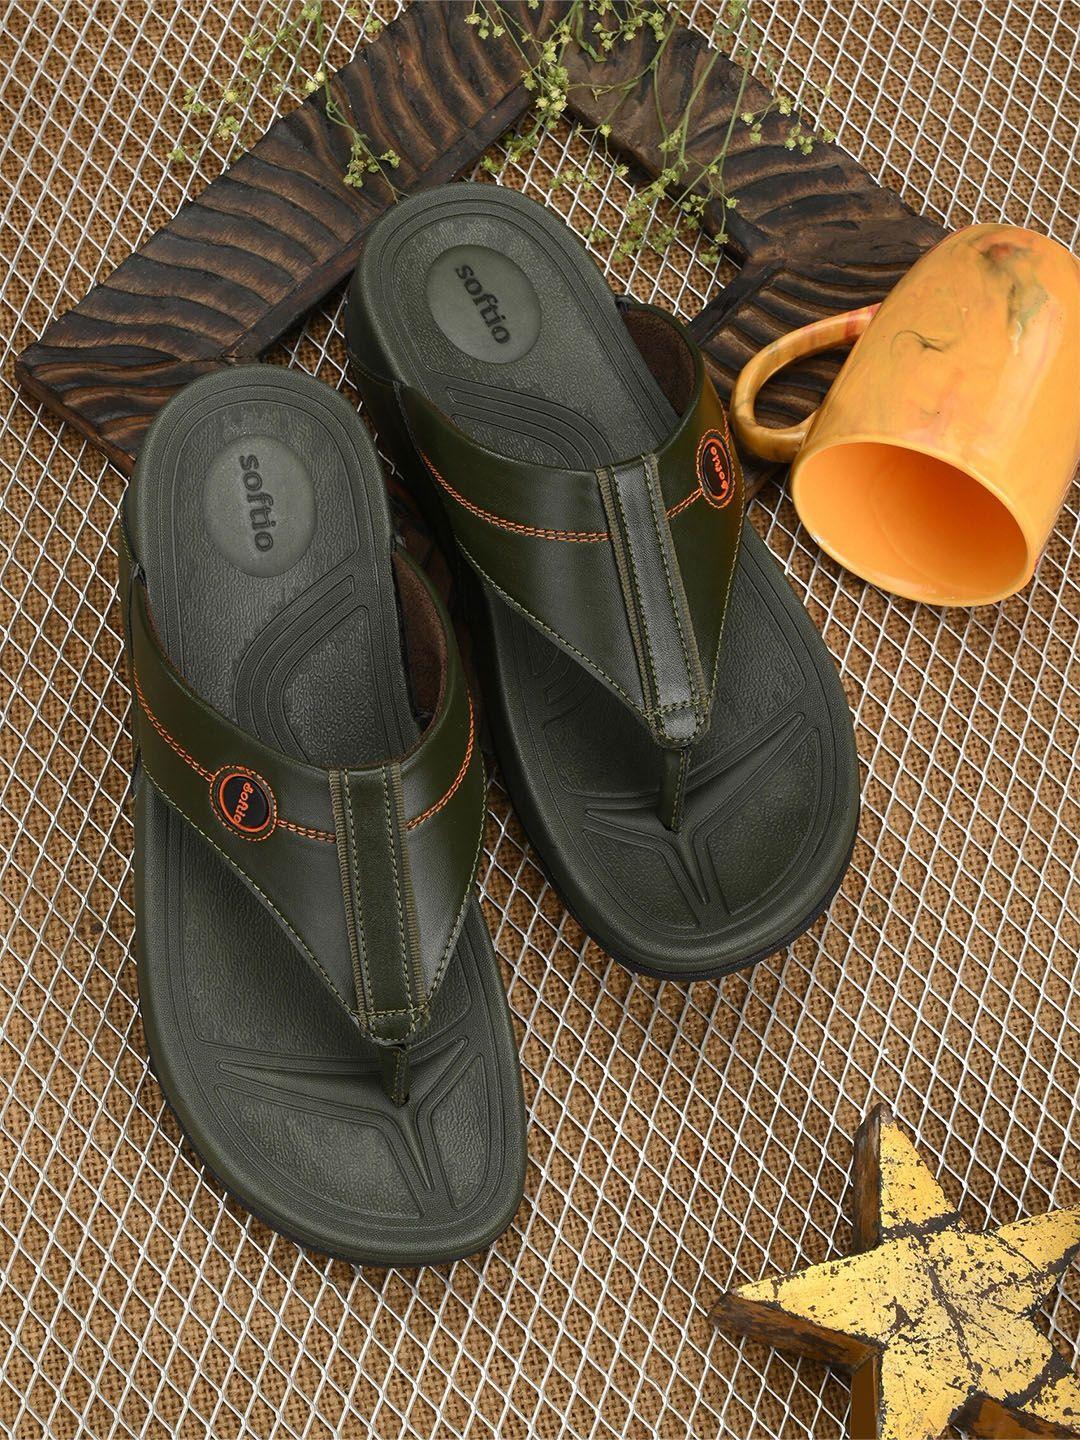 softio men olive green comfort sandals